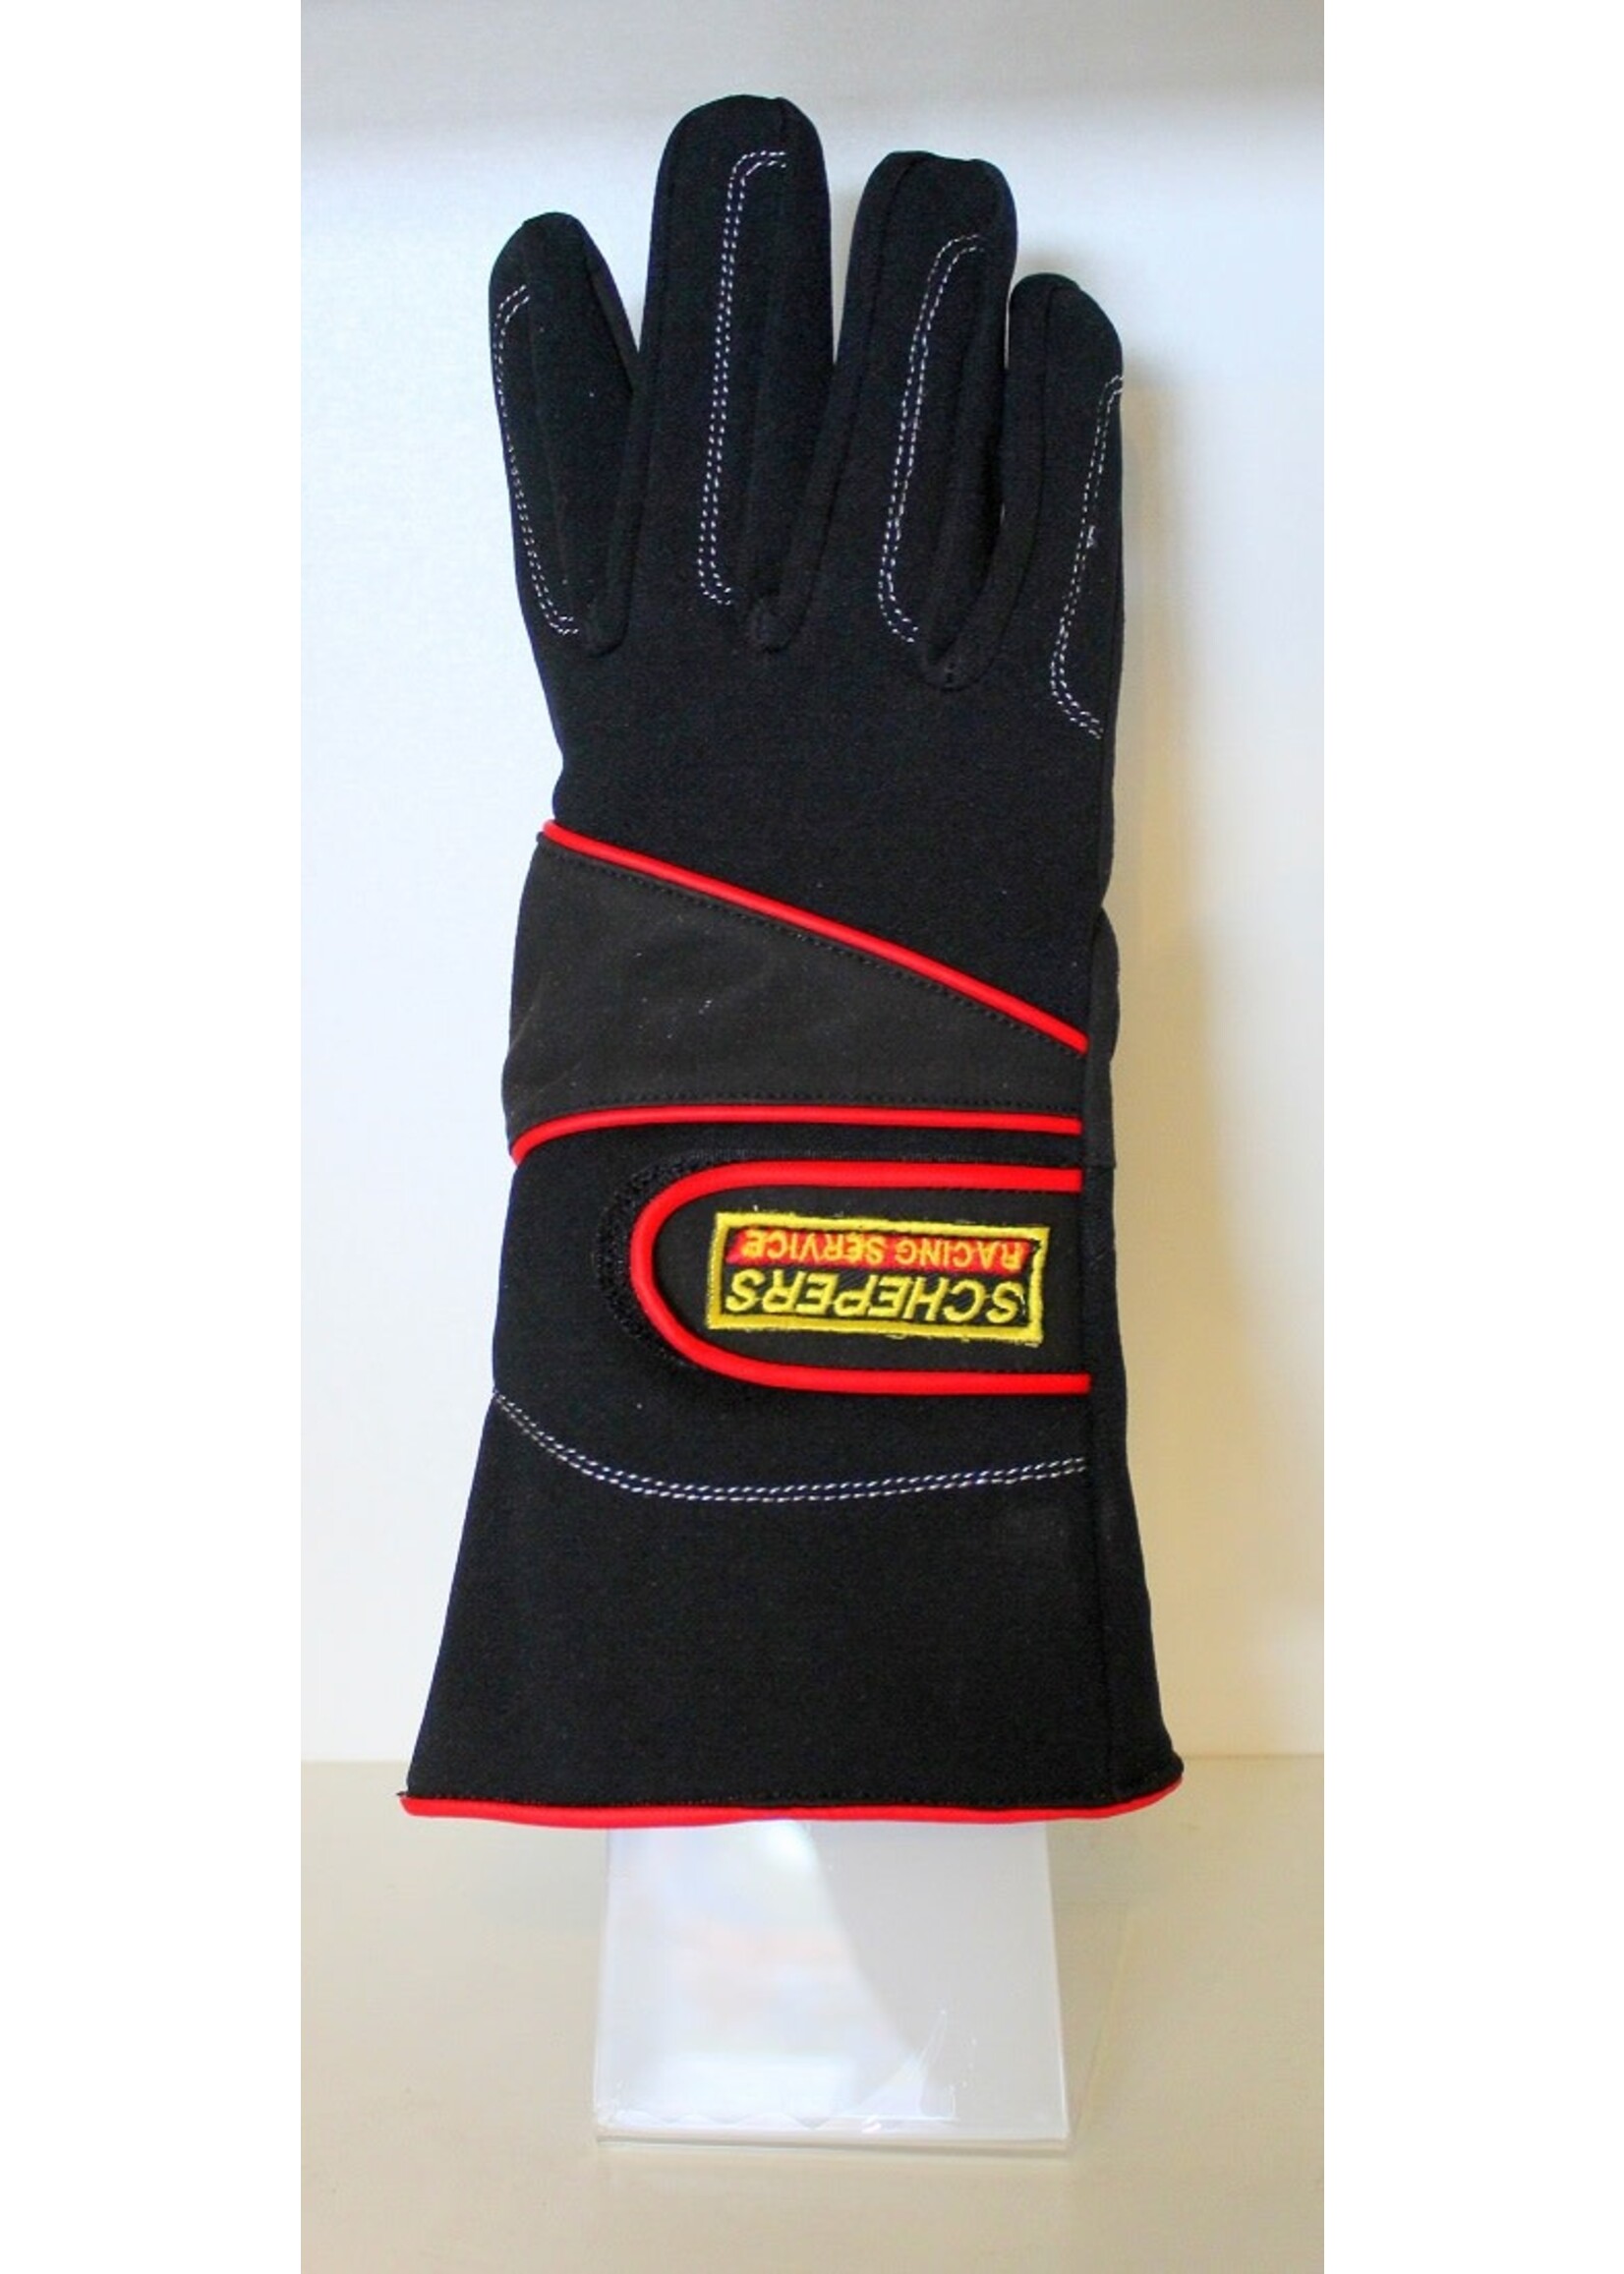 Schepers Gloves